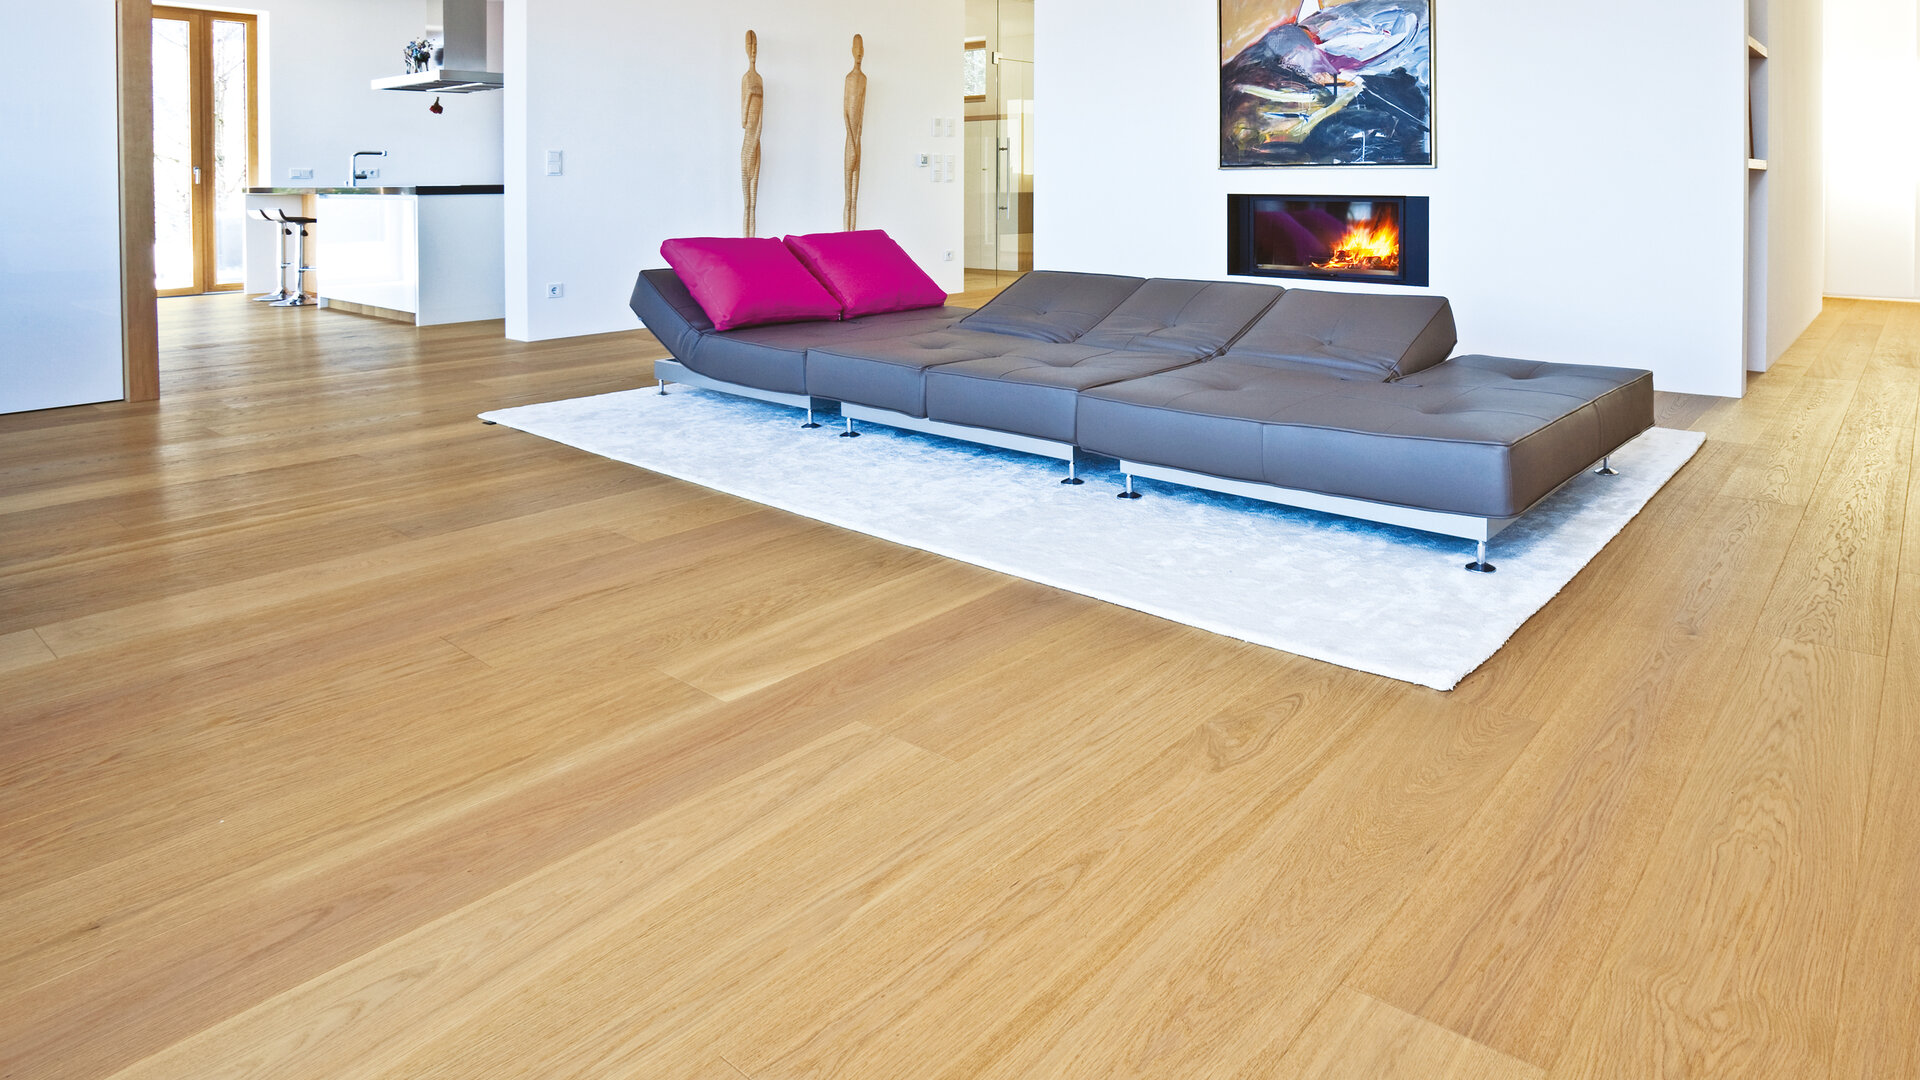 TRAPA Plank floor 
Oak placid brushed Cortina